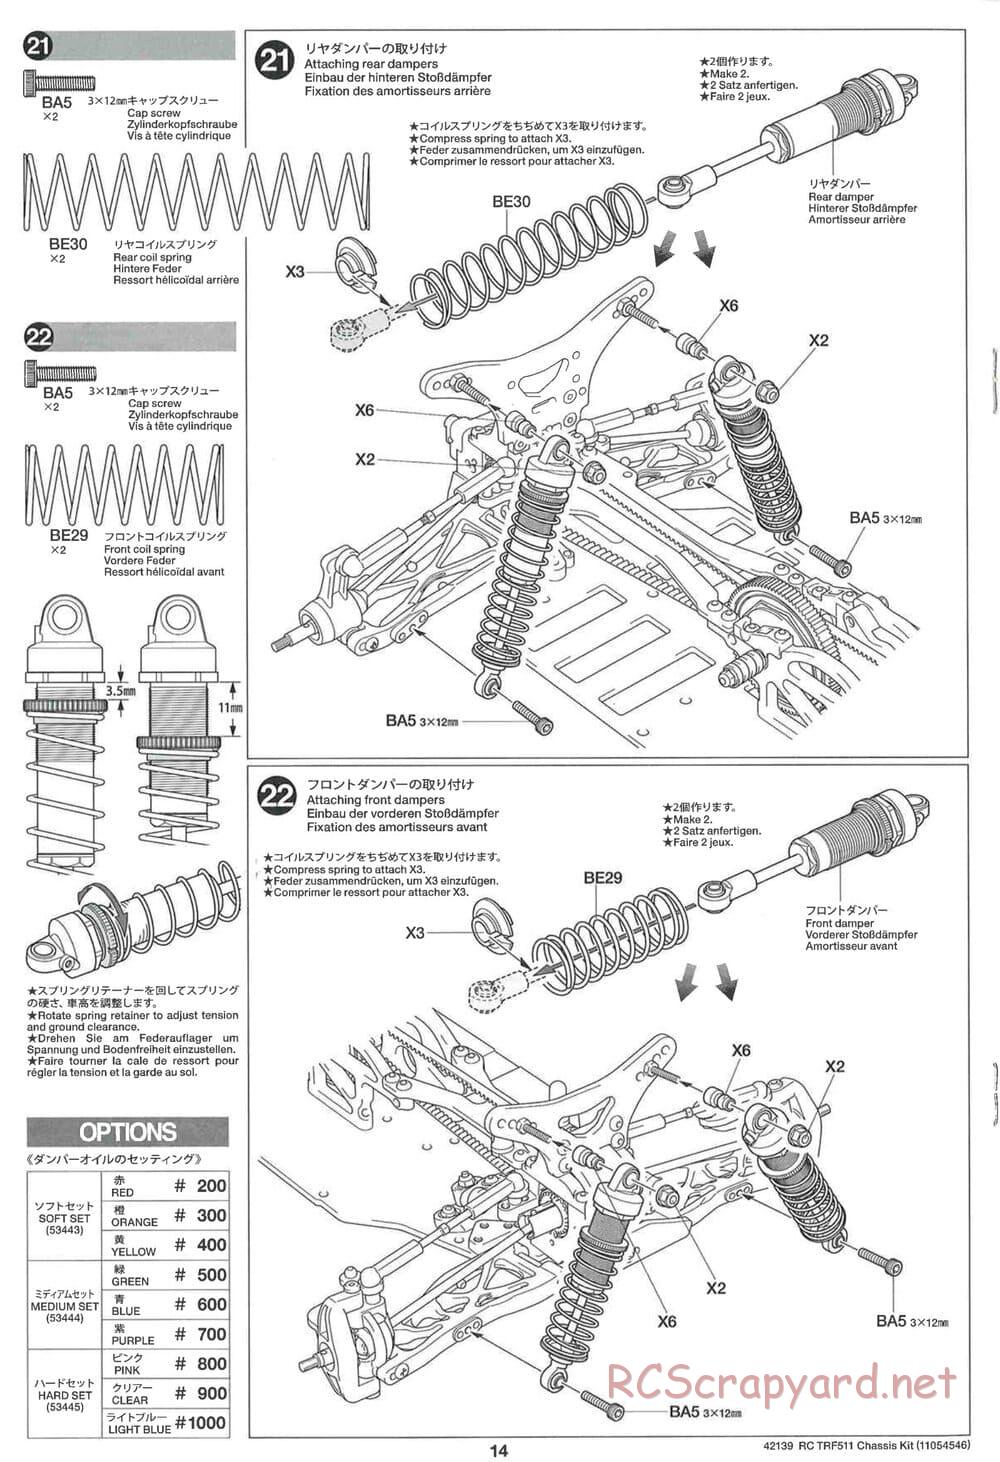 Tamiya - TRF511 Chassis - Manual - Page 14